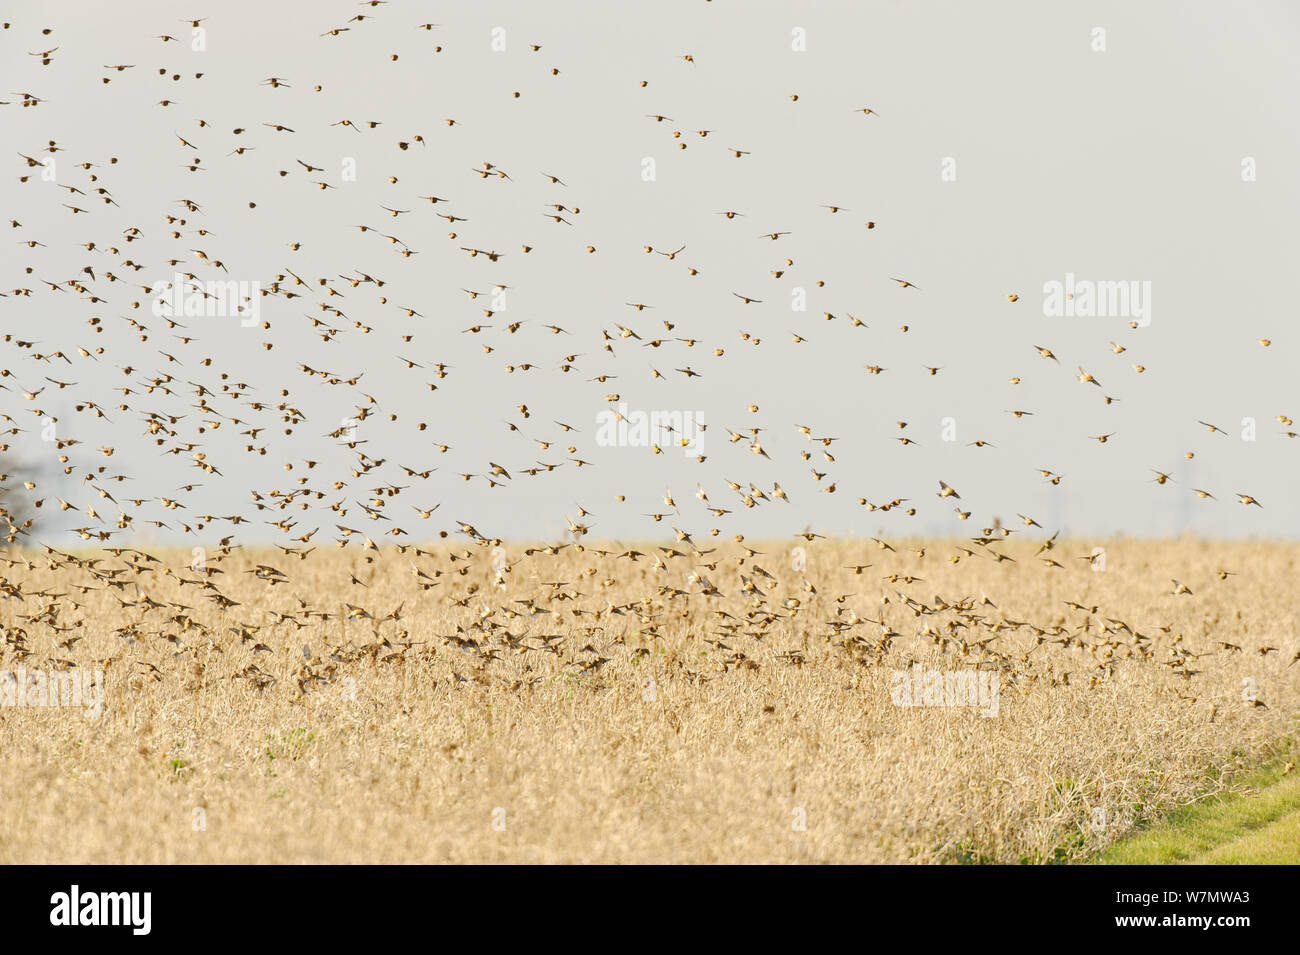 Herde Hänflinge (Carduelis cannabina) Landung auf Erhaltung des Ernteguts für Ackerland Vögel gewachsen, elmley Naturschutzgebiet, Kent, England, UK, Februar. Stockfoto